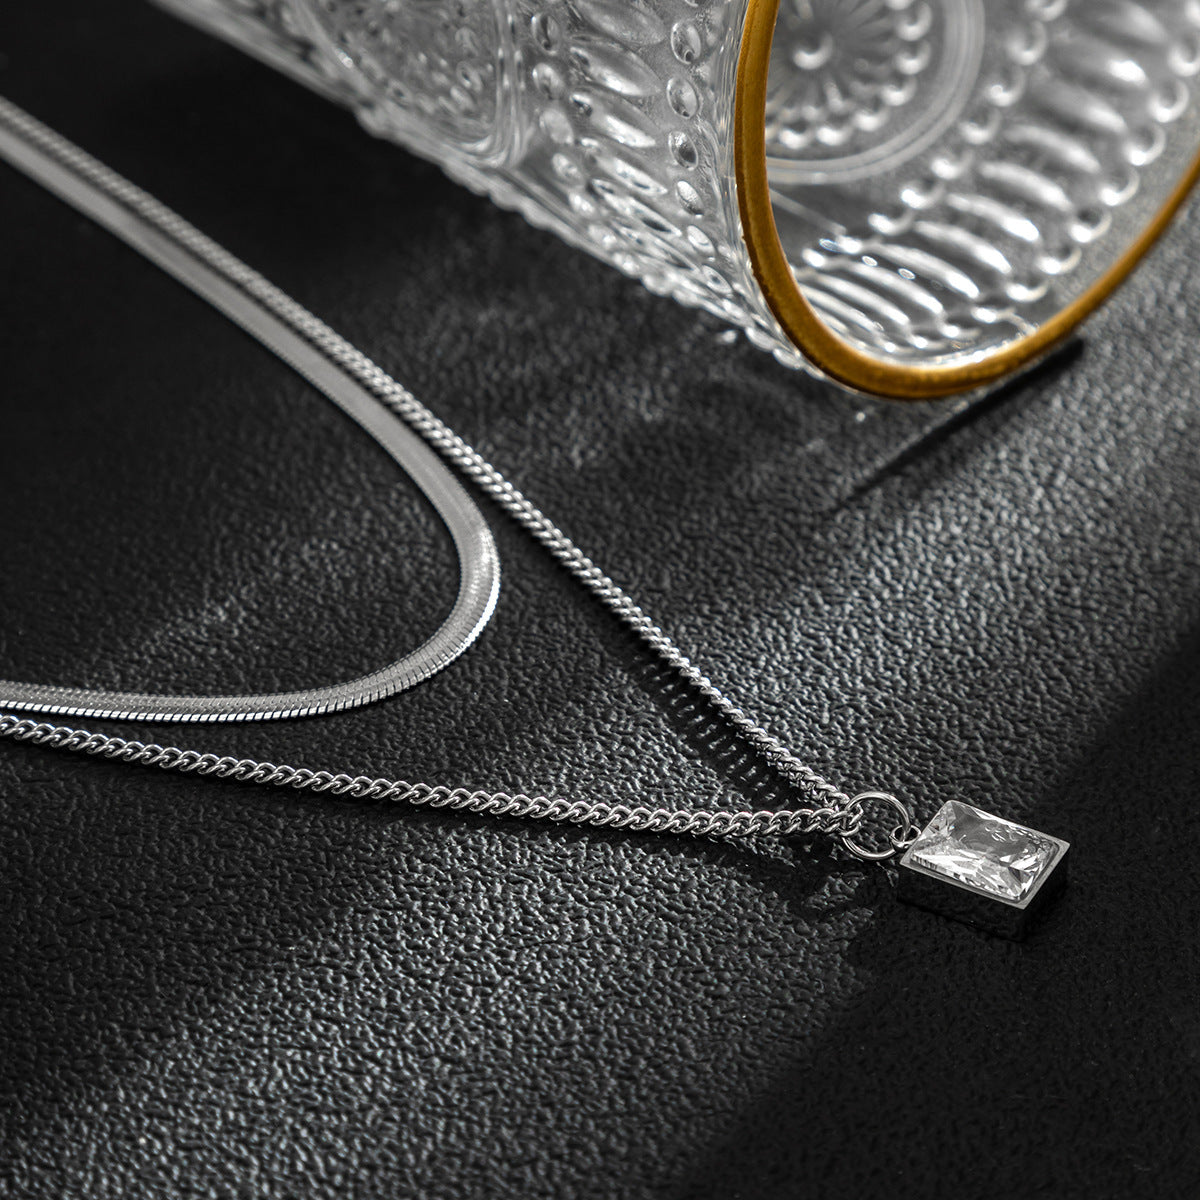 Men Simple fashion with square diamond snake bone chain design light luxury wind necklace